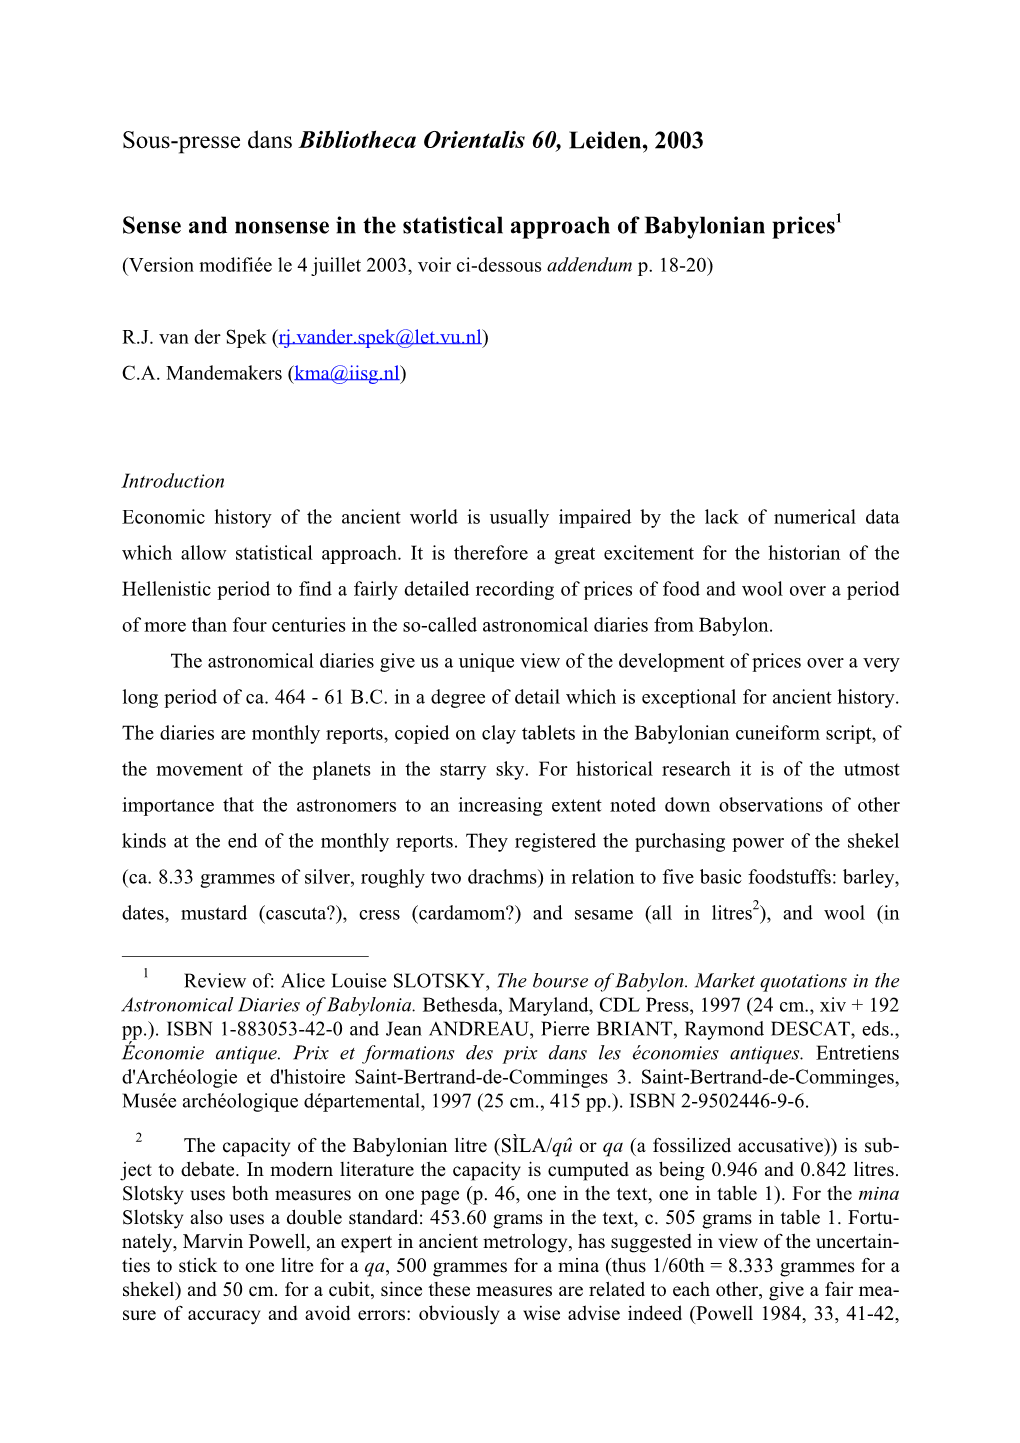 Sense and Nonsense in the Statistical Approach of Babylonian Prices1 (Version Modifiée Le 4 Juillet 2003, Voir Ci-Dessous Addendum P